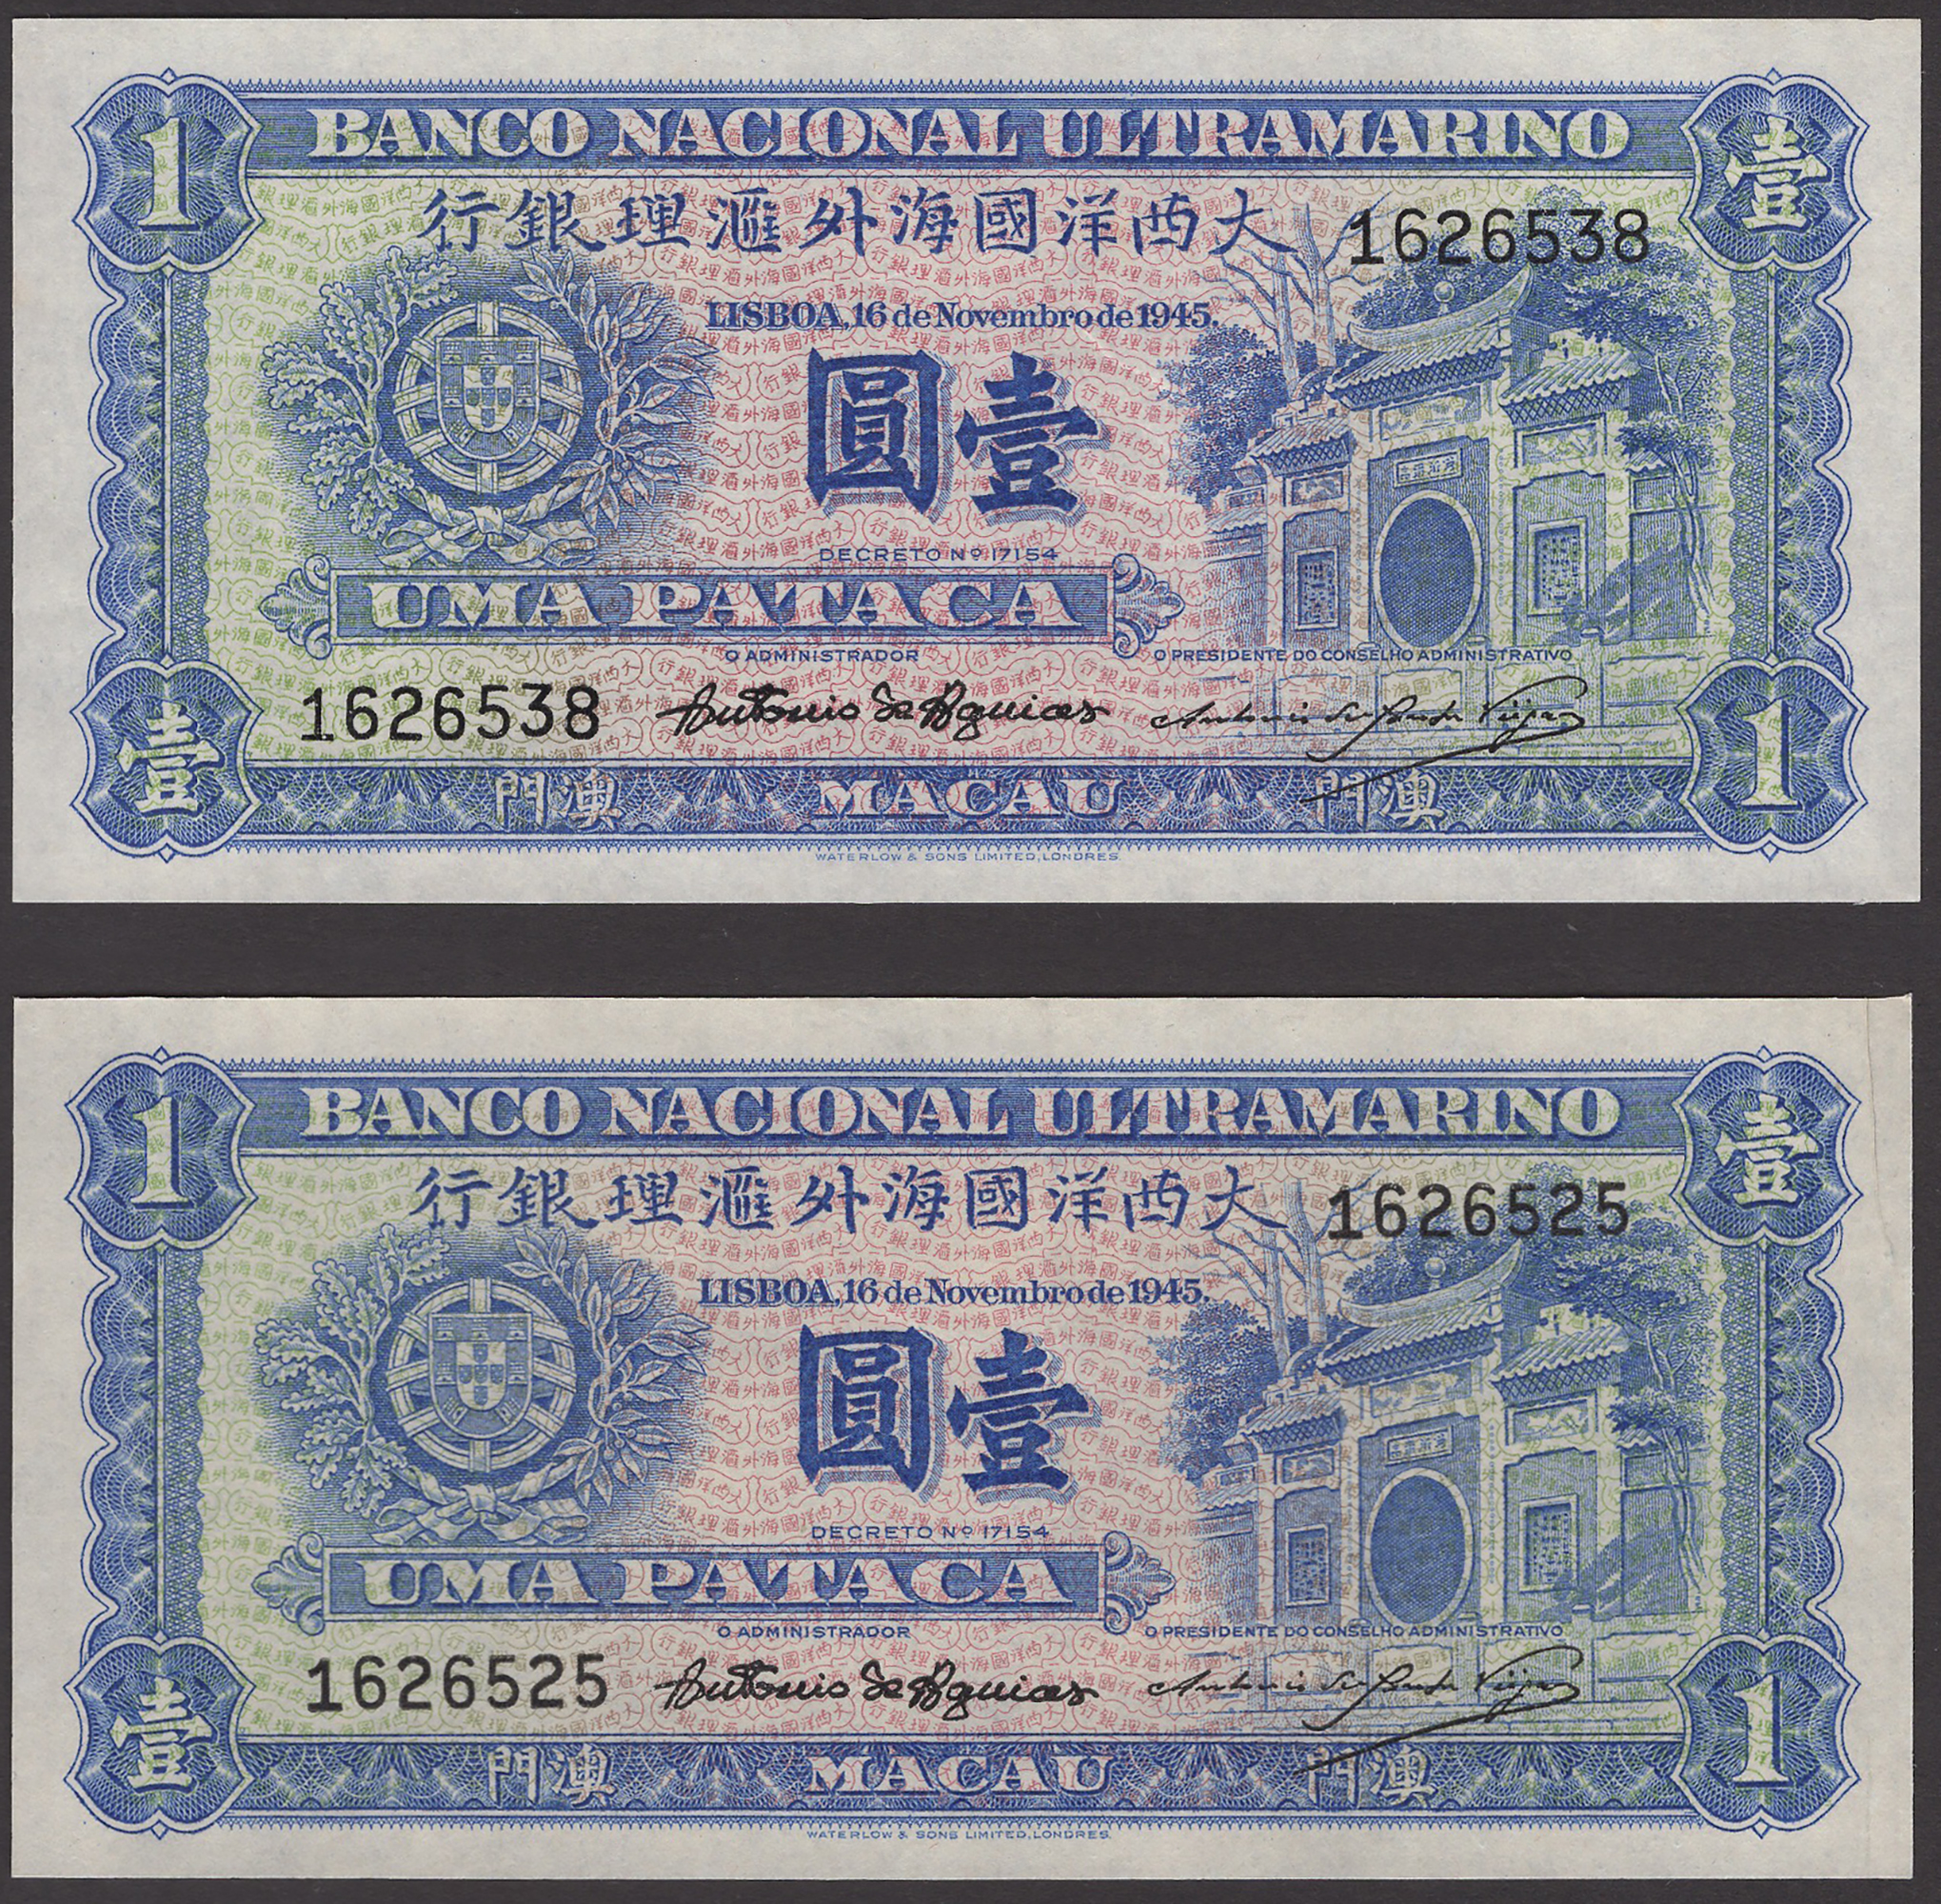 Banco Nacional Ultramarino, Macau, 1 Pataca, 16 November 1945, serial numbers 1626538 and...